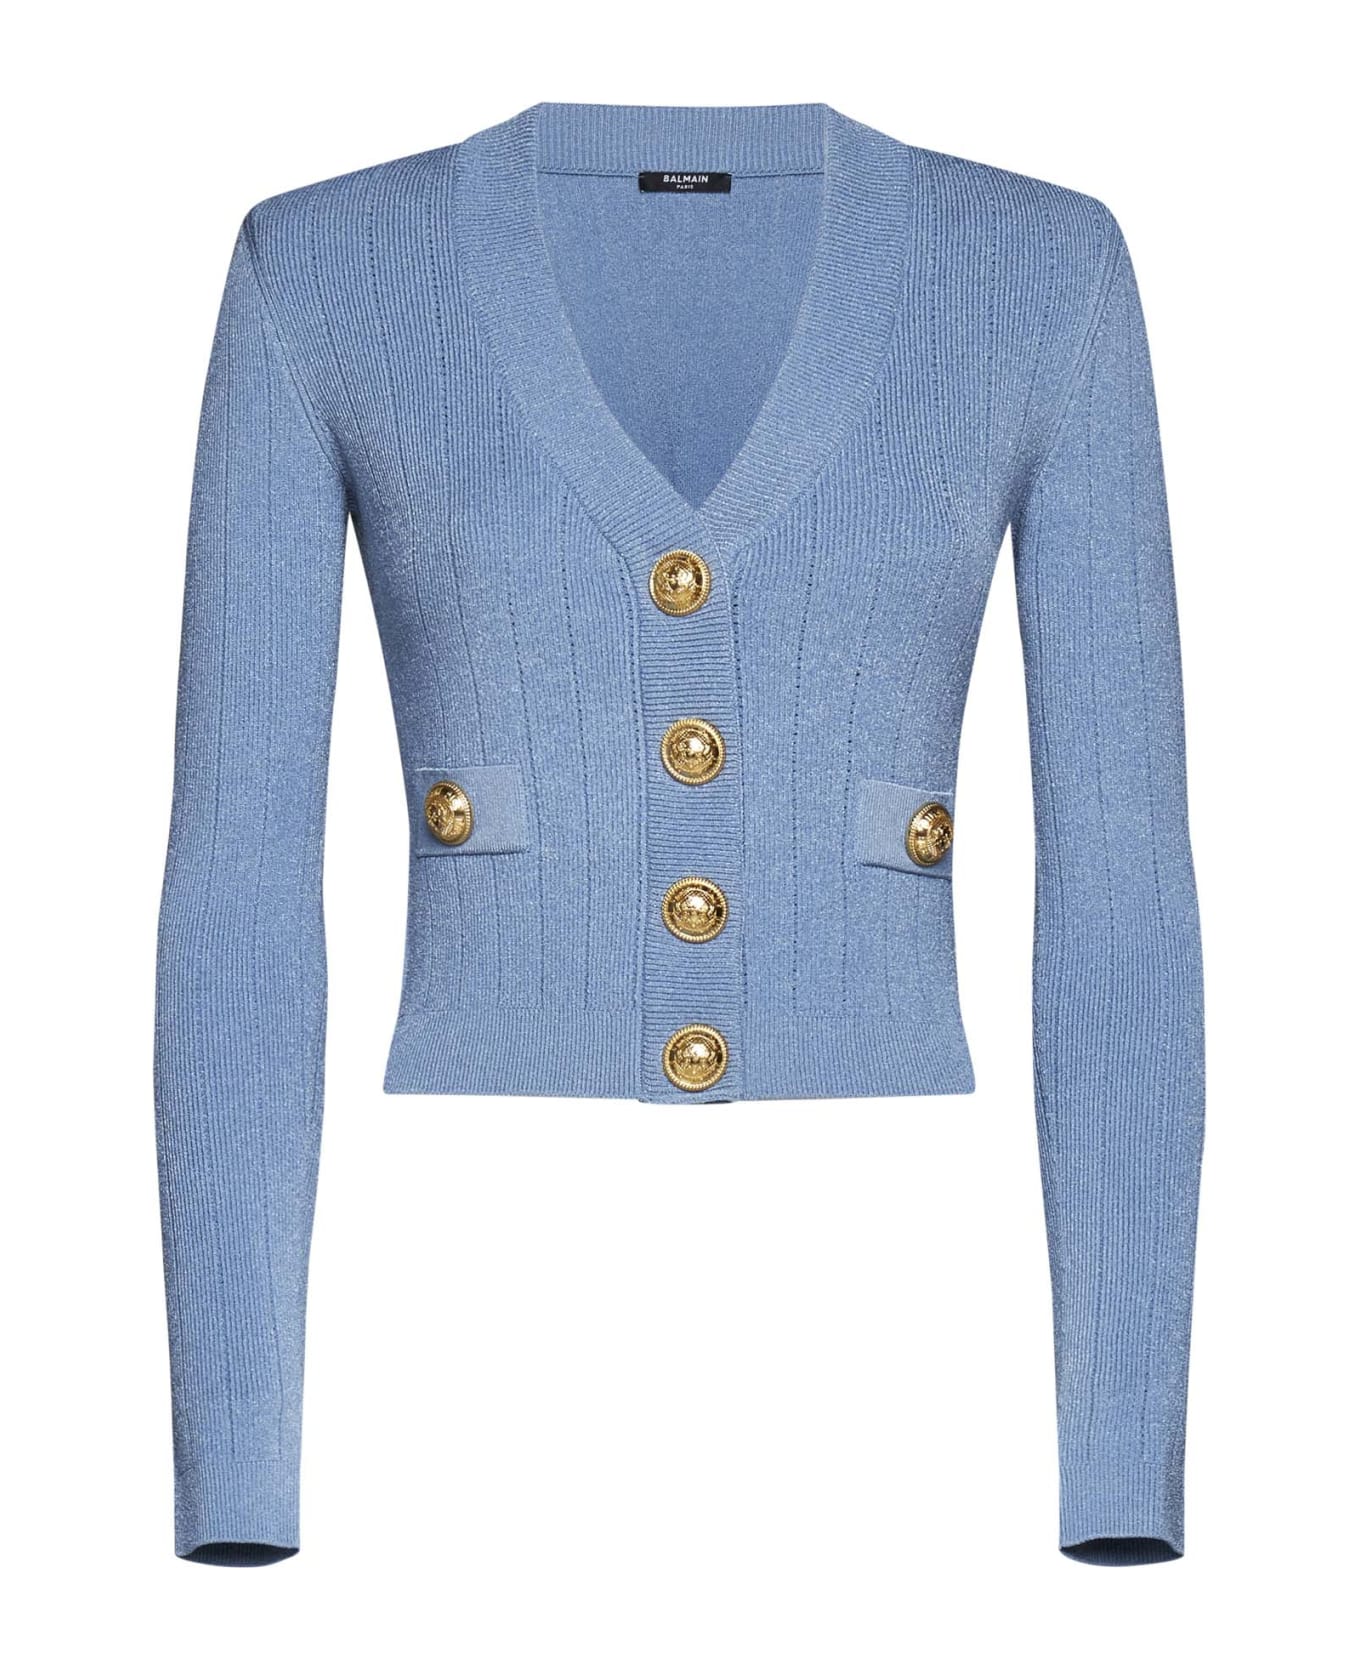 Balmain Gold Buttons Knit Cardigan - Bleu pale